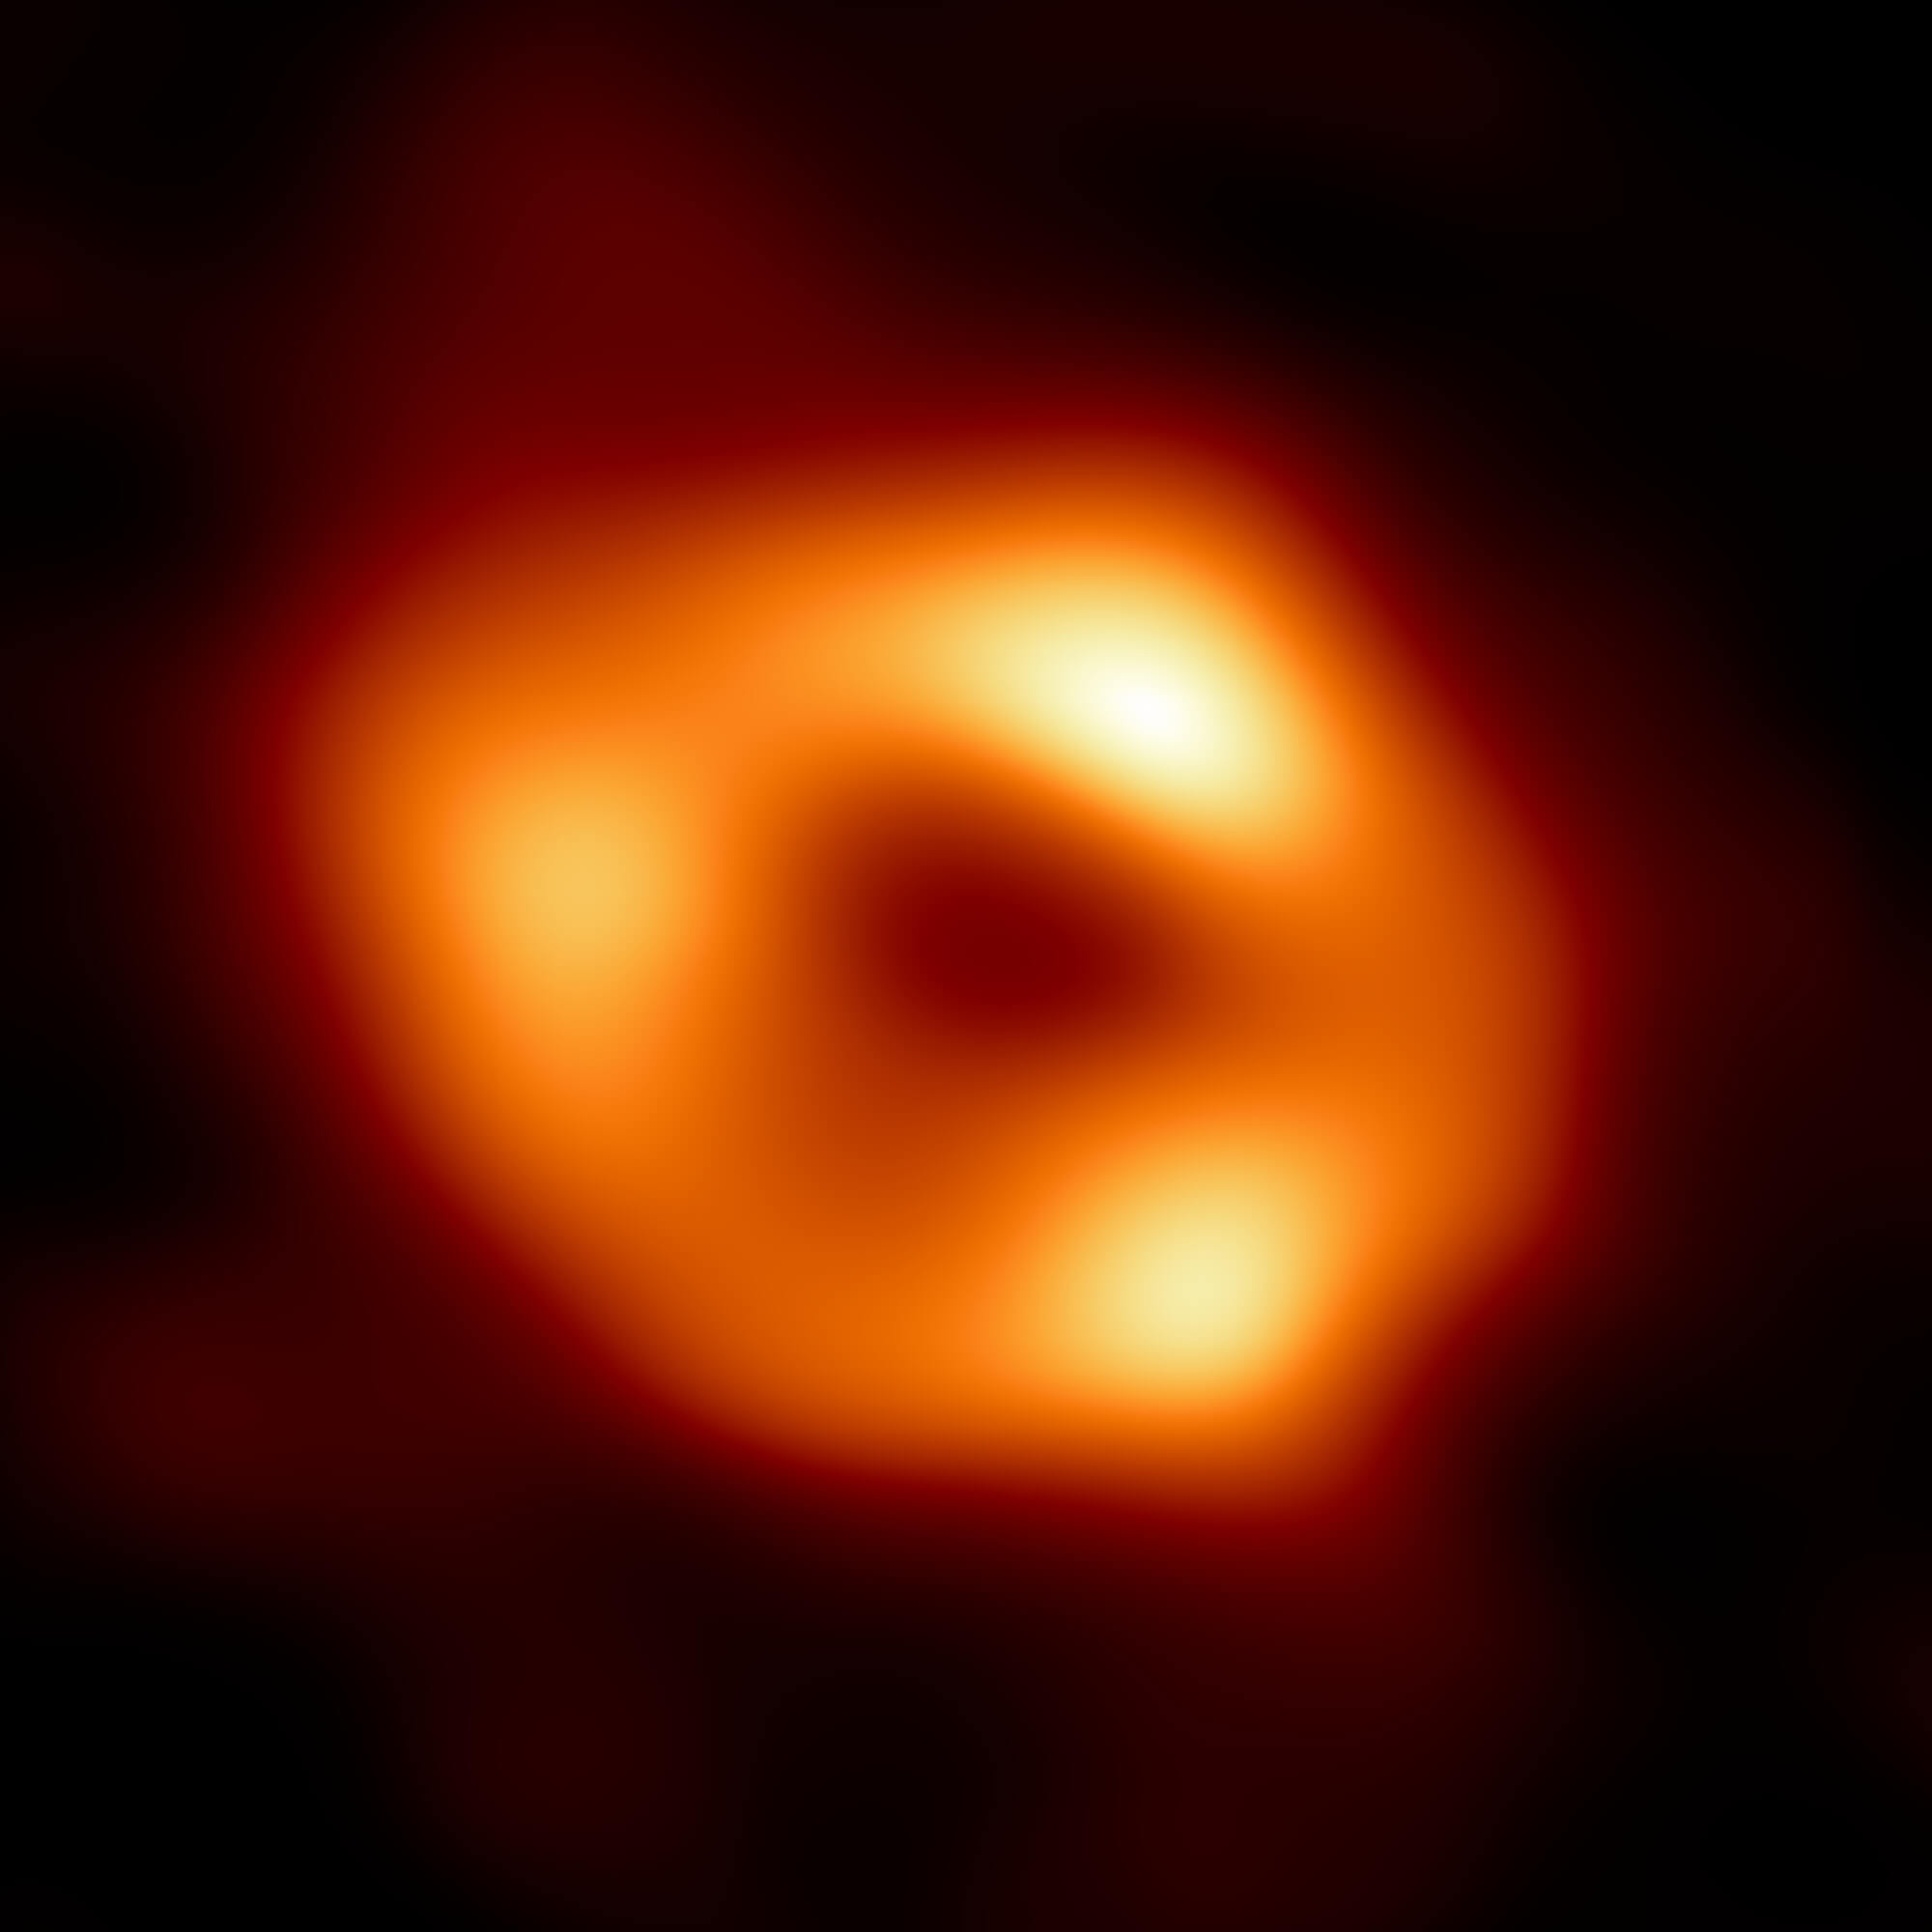 Sagittarius A* black hole